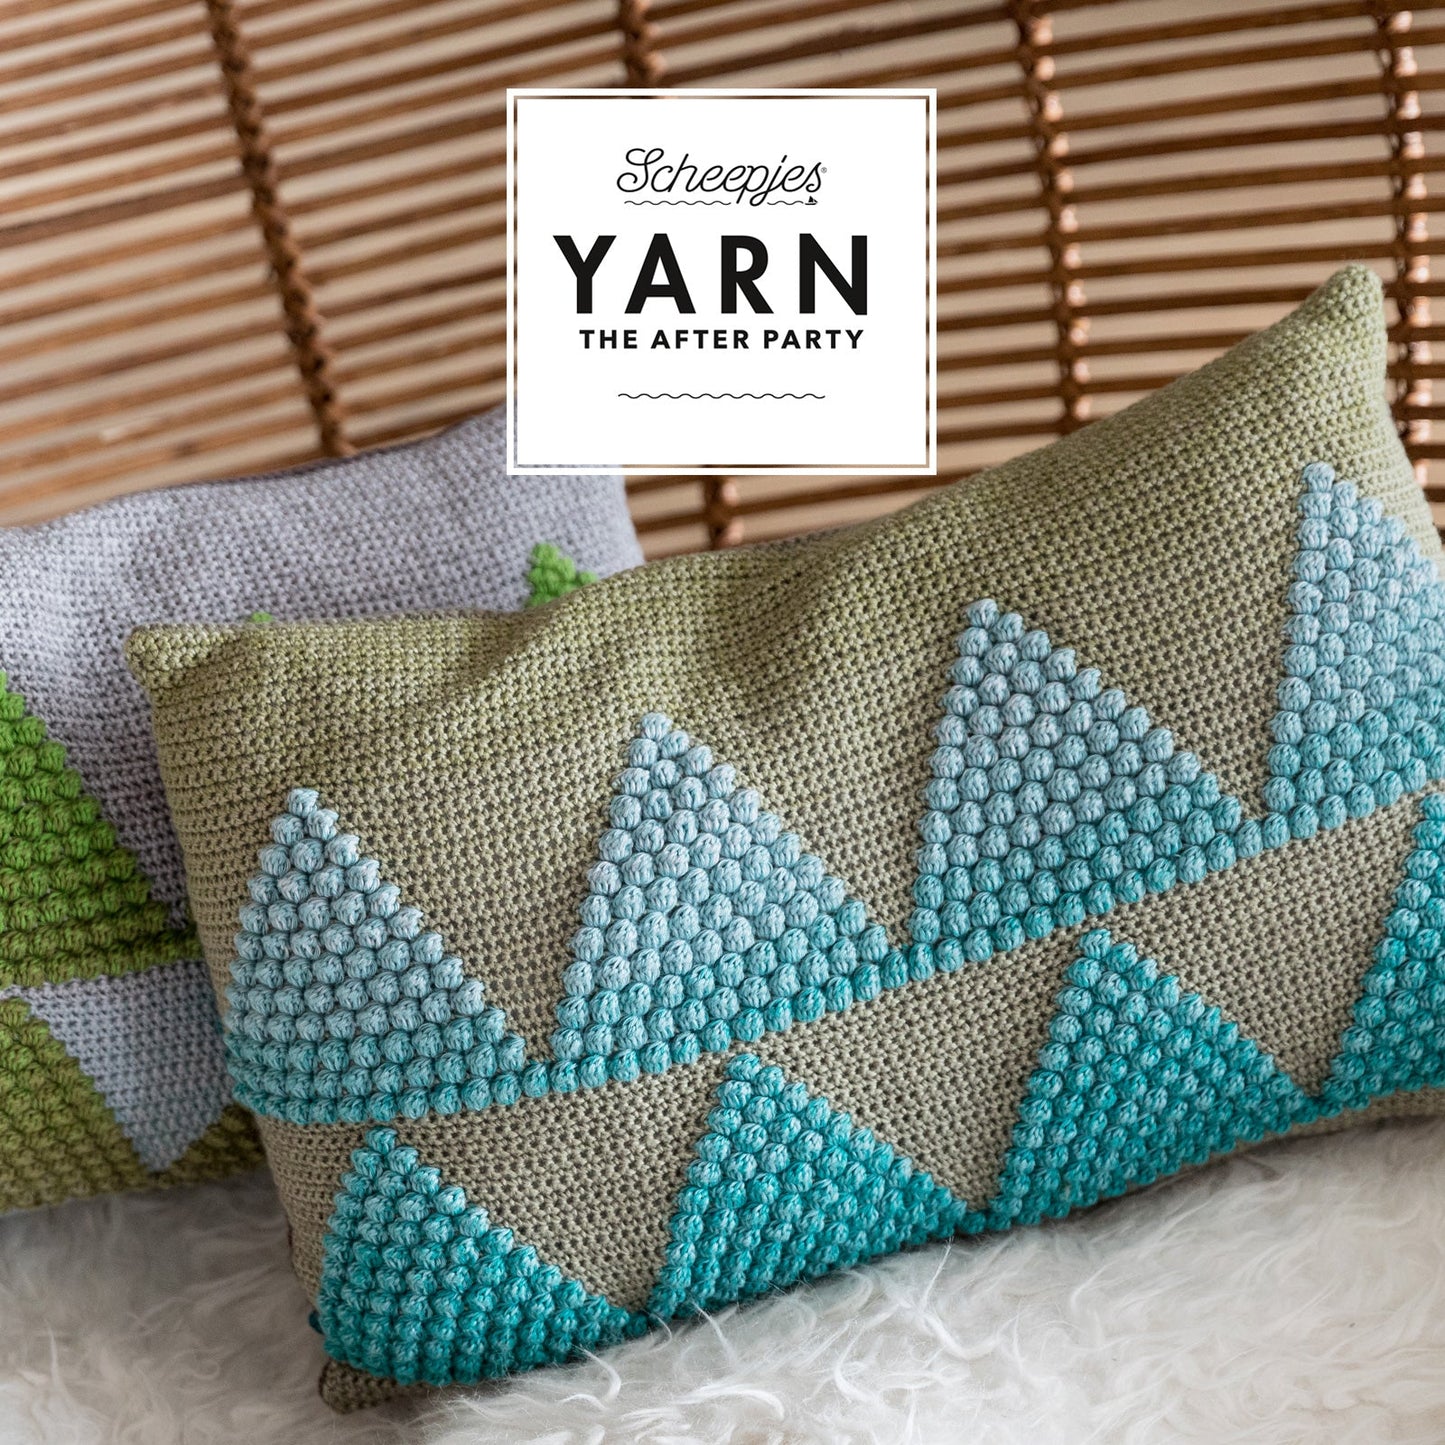 Wild Forest Cushion Crochet Pattern | Crochet Kit